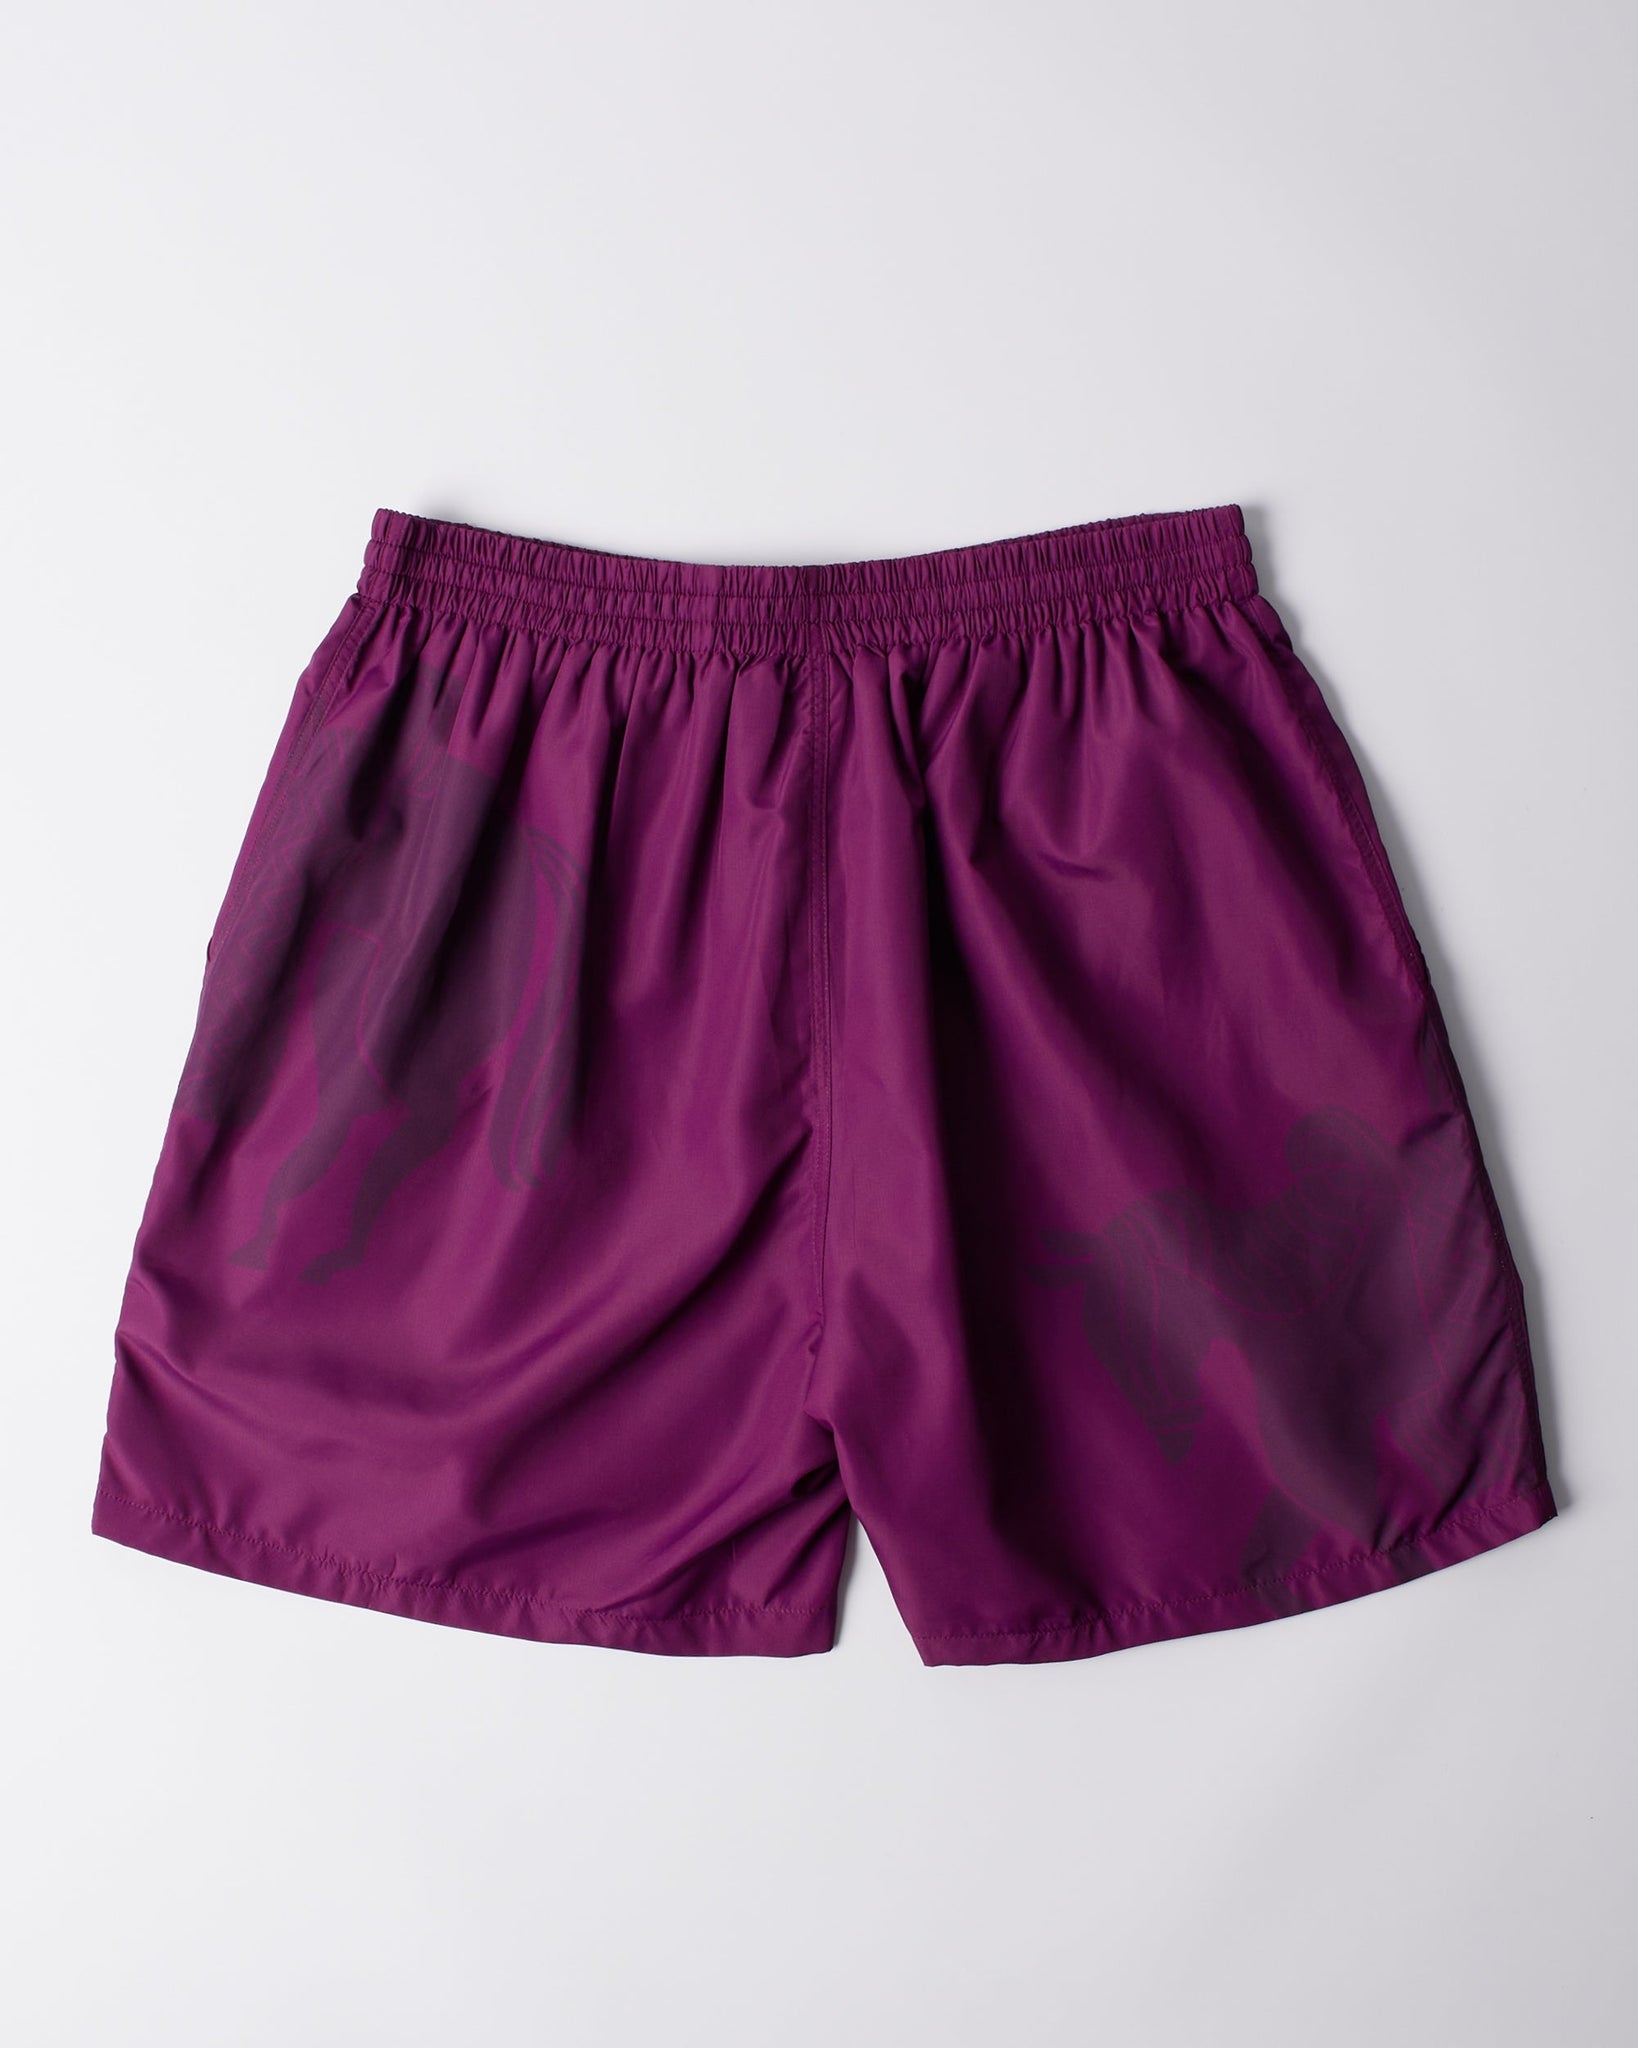 Short horse shorts - tyrian purple